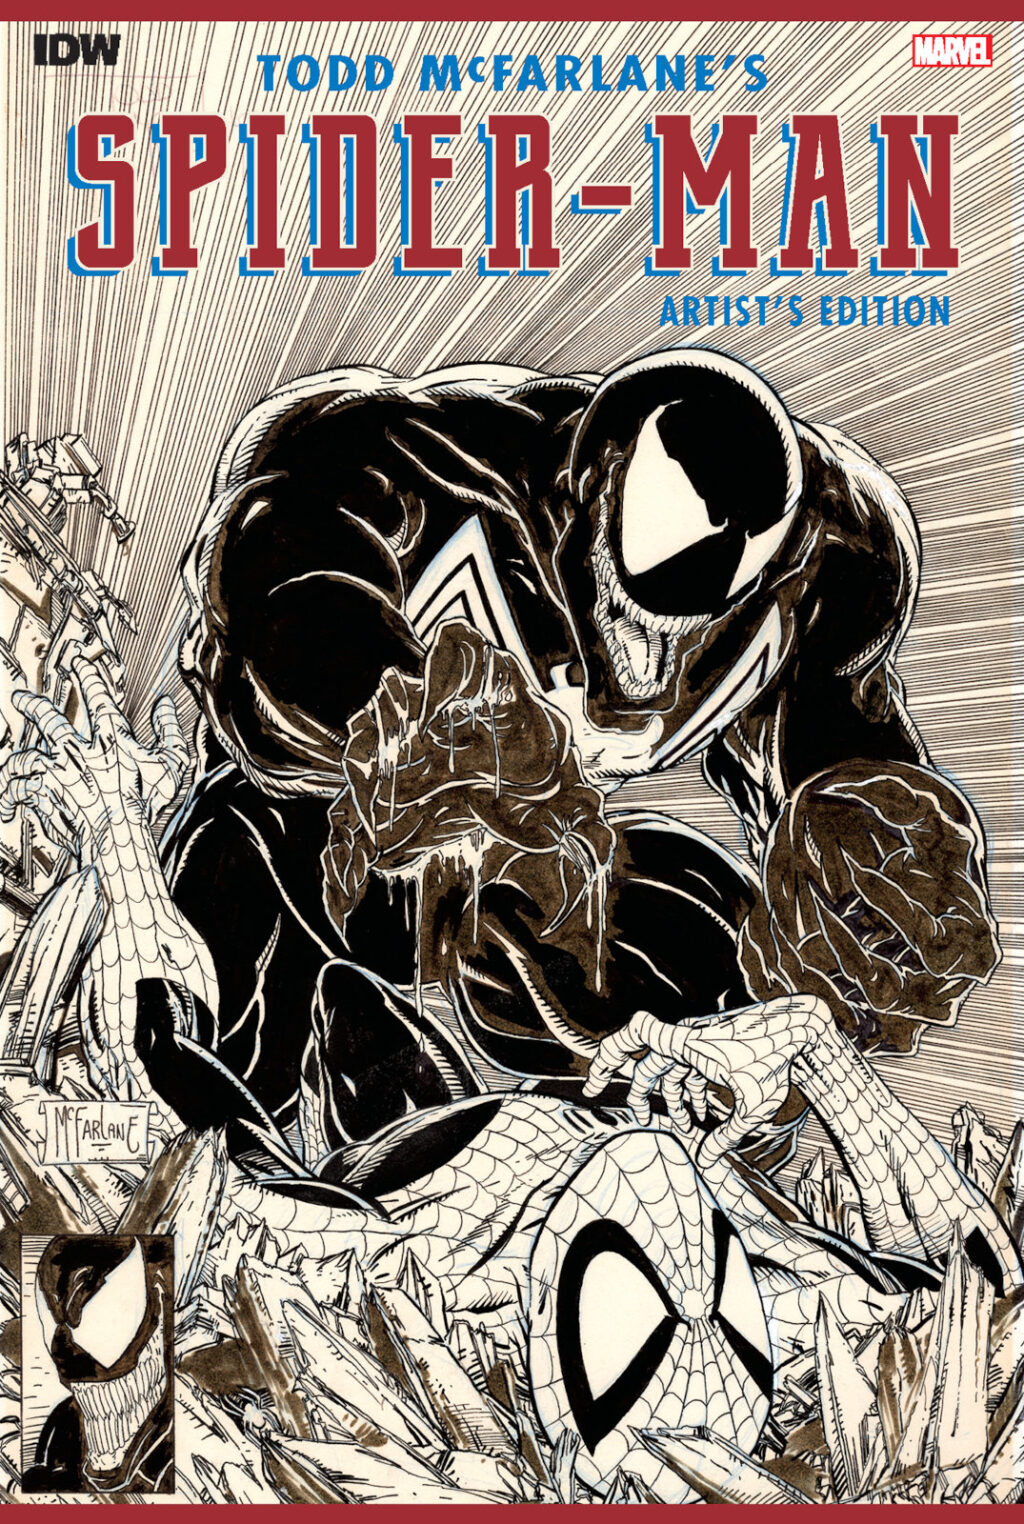 Todd McFarlanes Spider Man Artists Edition cover prelim